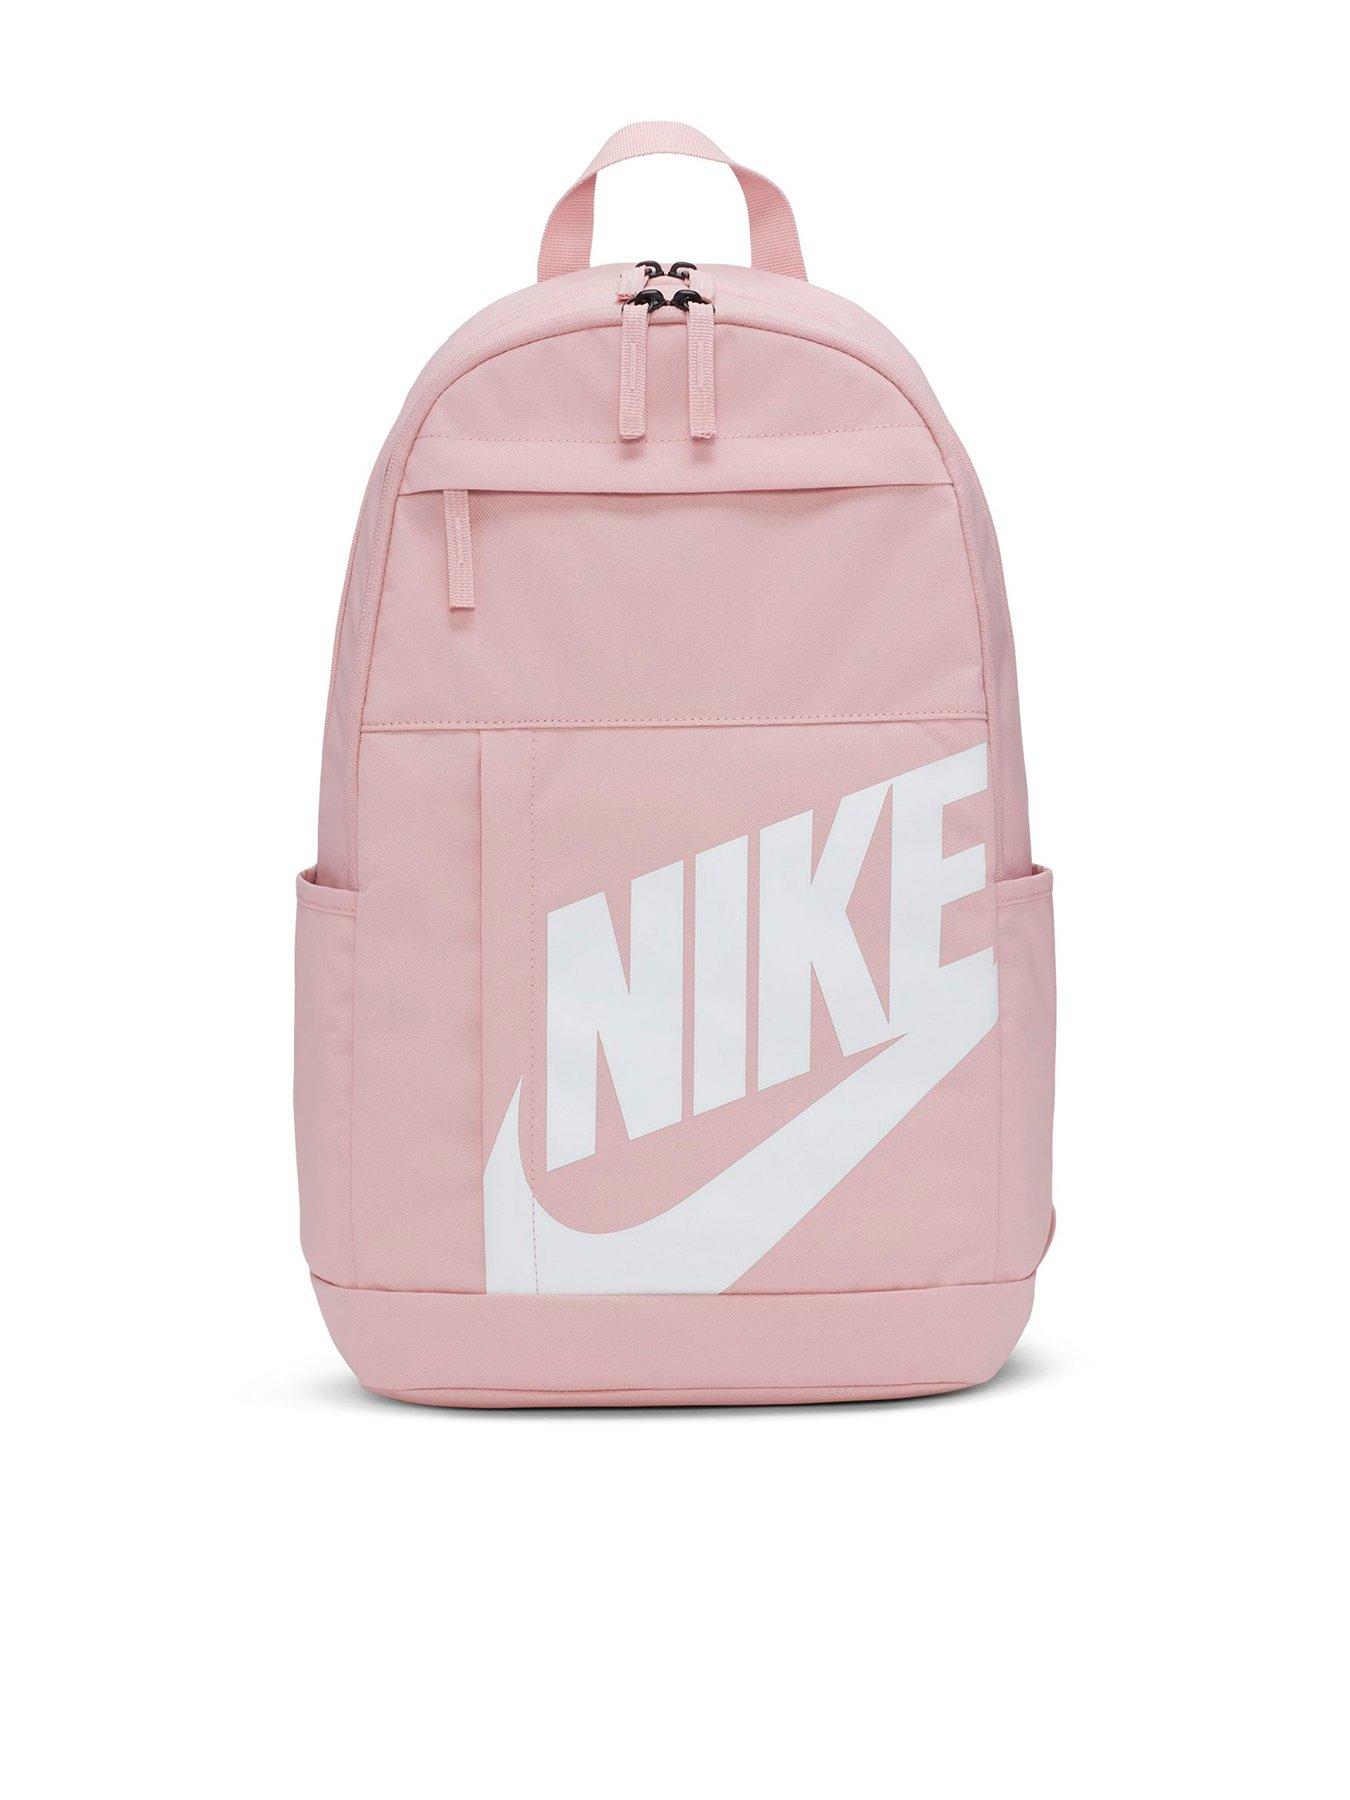 Nike Elemental Backpack - Light Pink | very.co.uk